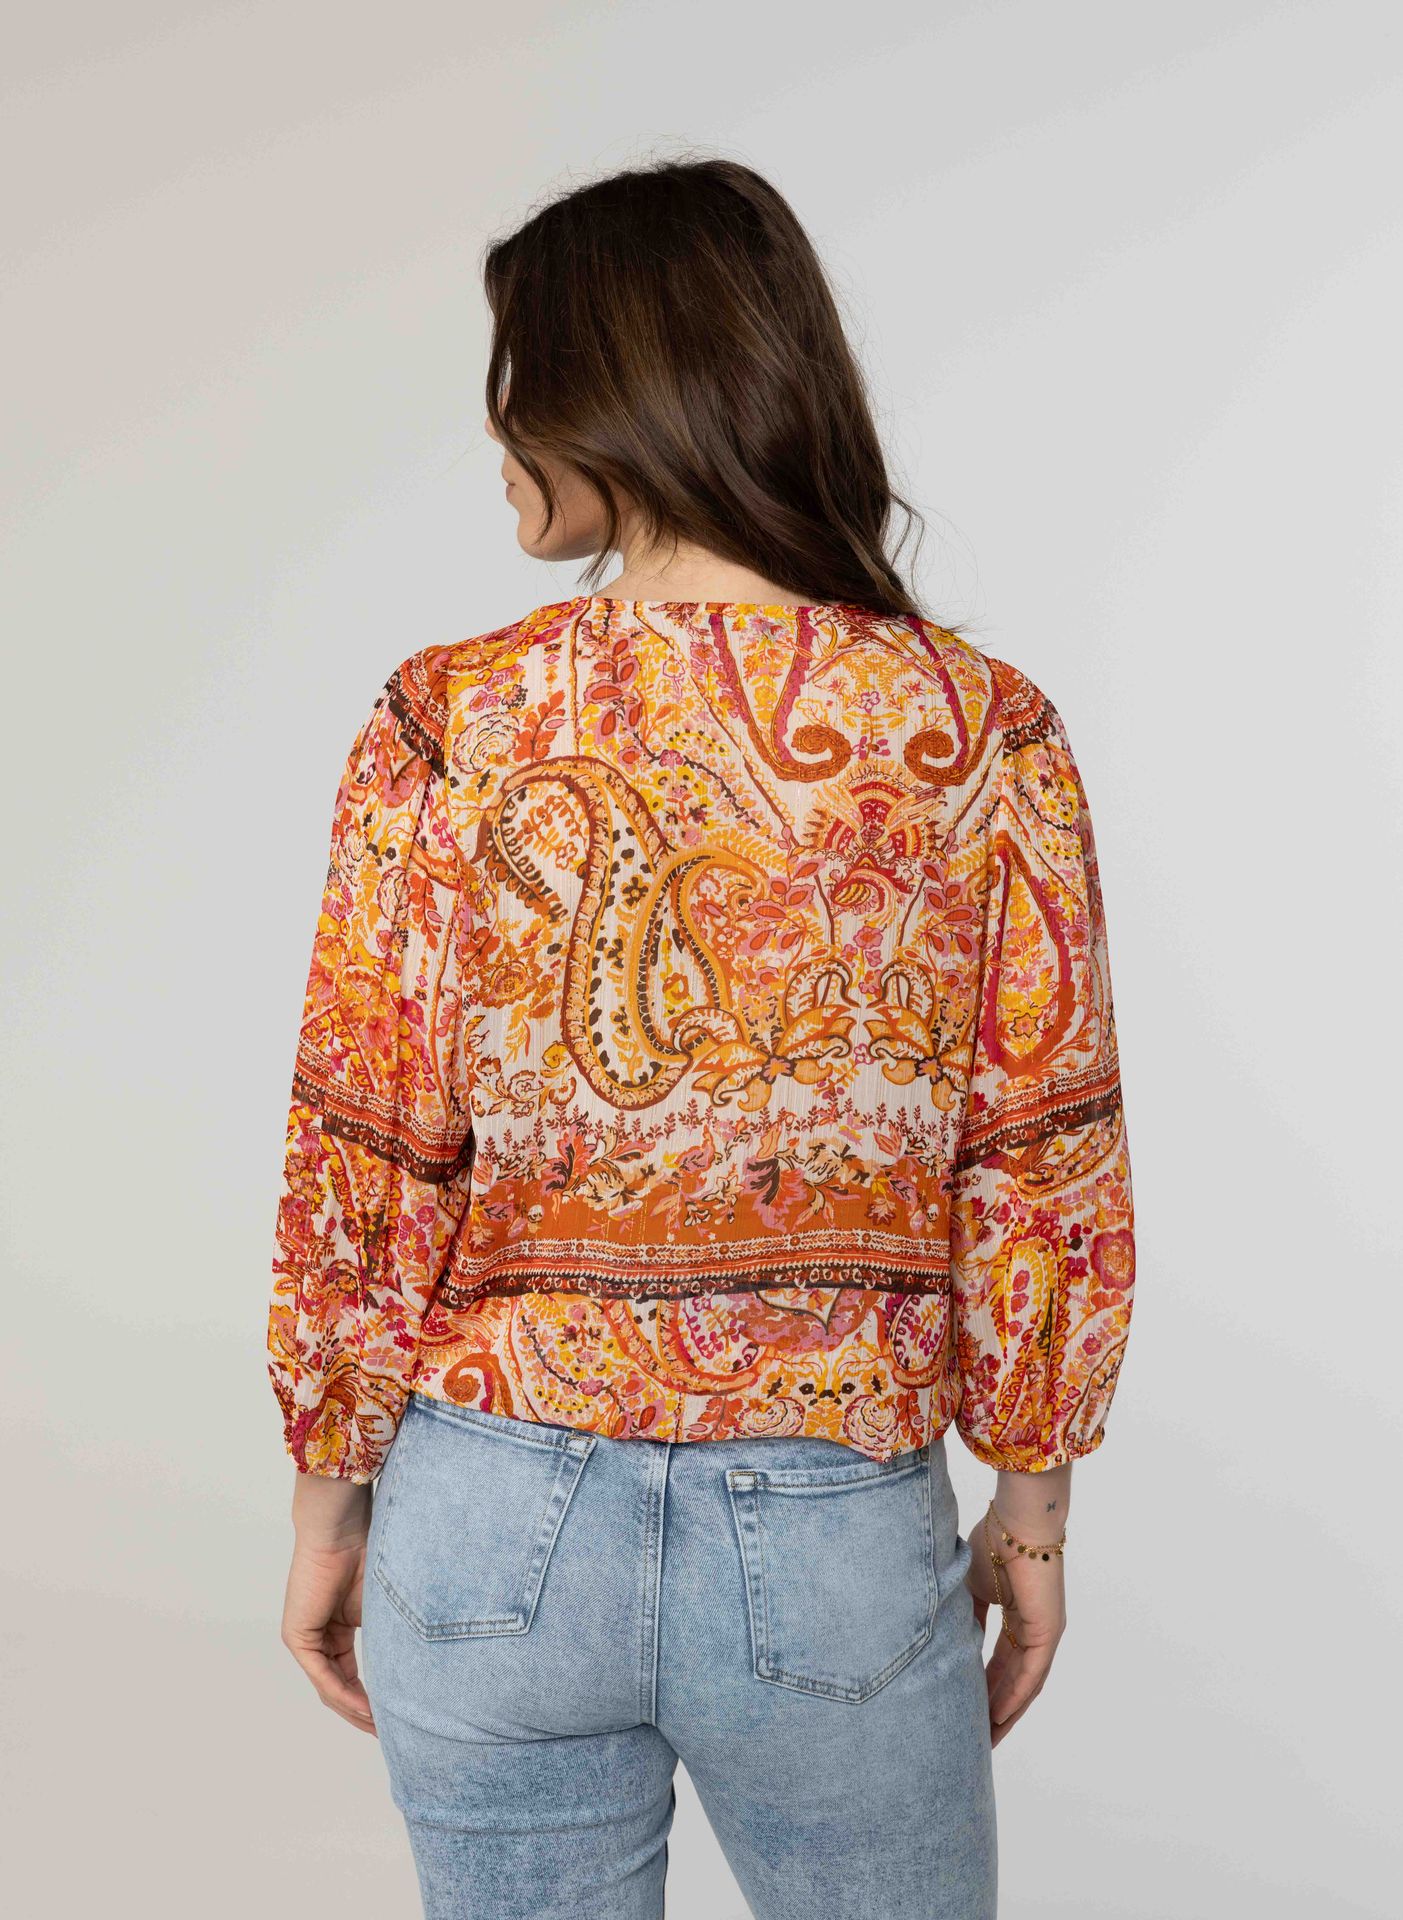 Norah Meerkleurige blouse met glitter orange multicolor 213428-720